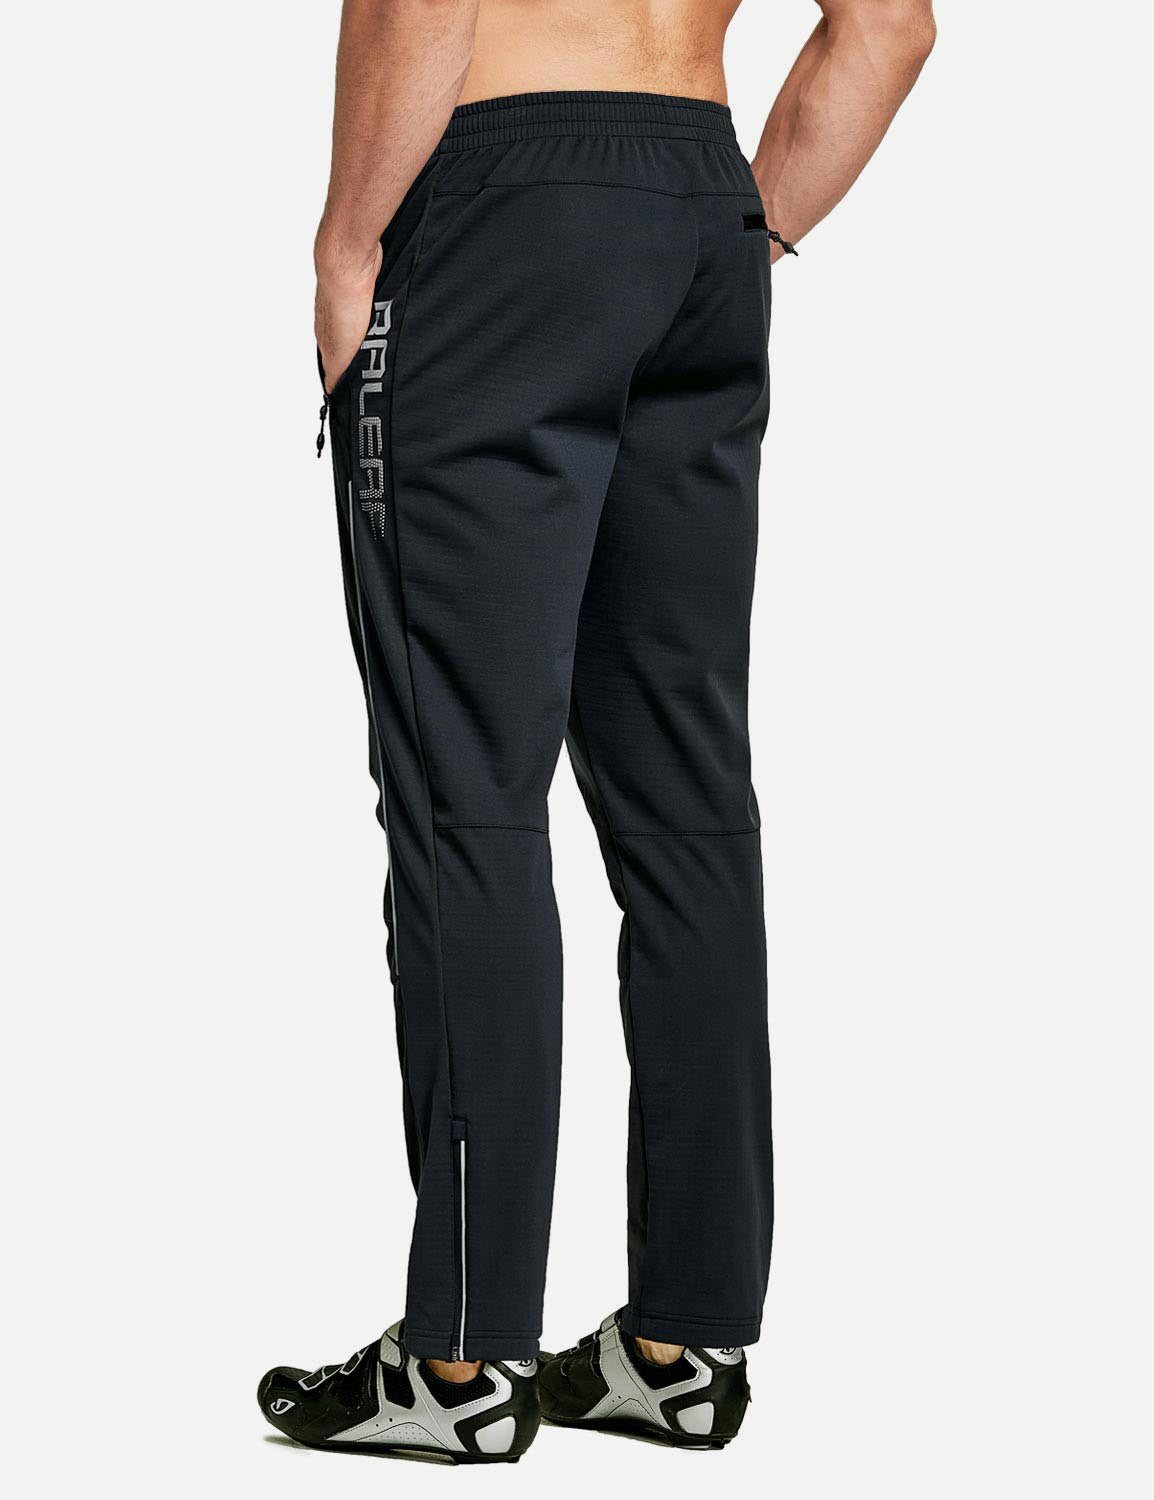 Baleaf Men's Thermal Fleece-Lined Windproof Pocketed Sweat Pants aai076 Black Back